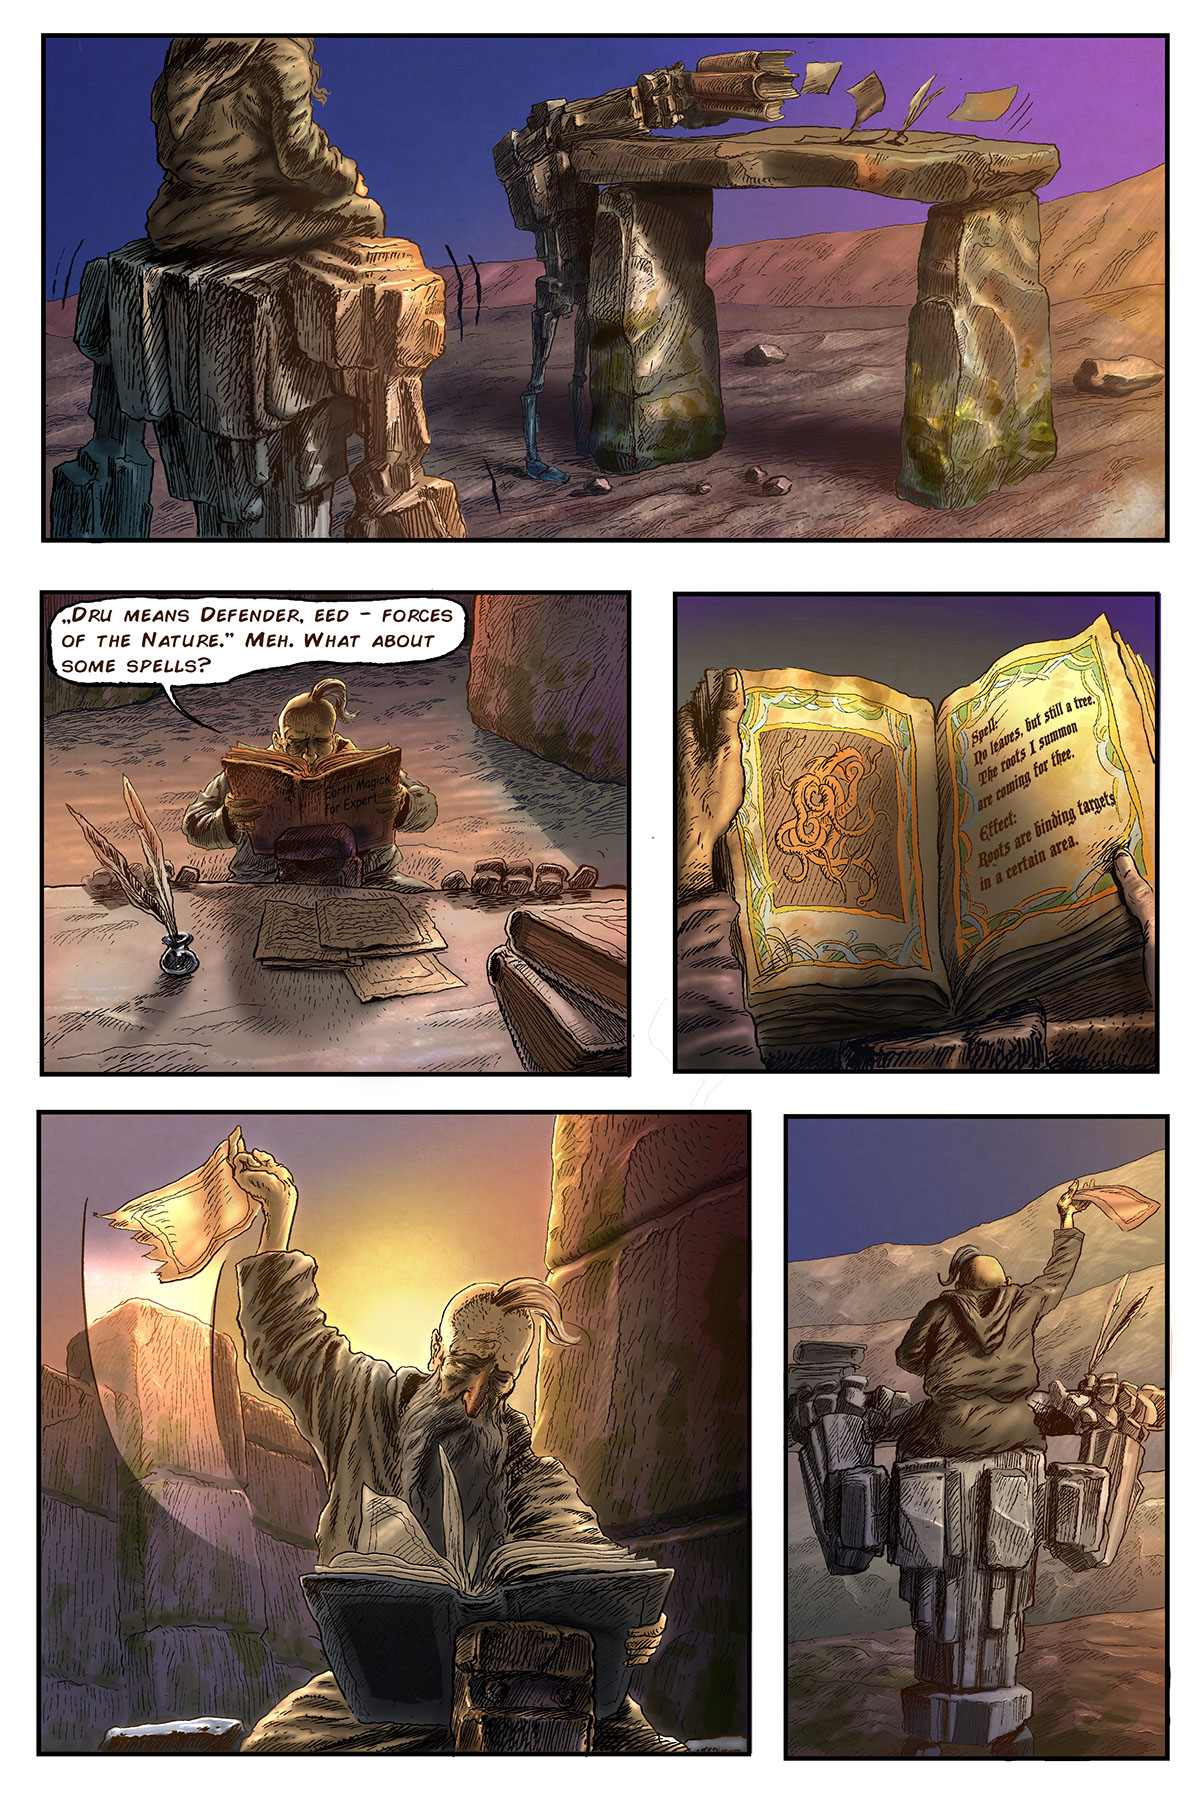 Comic Book fantasy ILLUSTRATION  game prologue narrative story intro design game